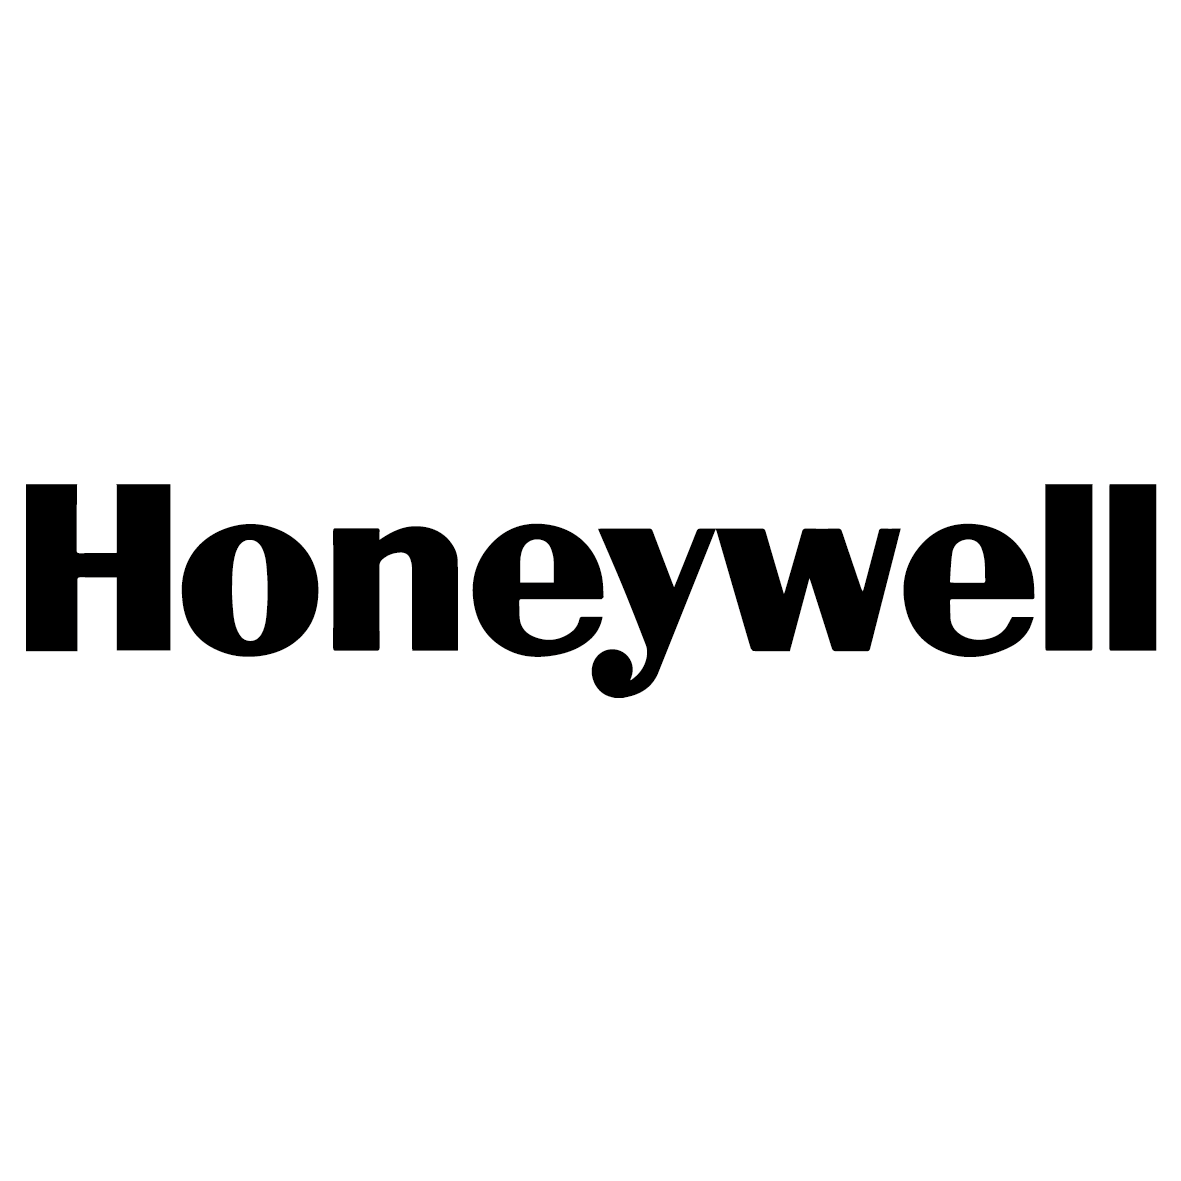 P Honeywell 01